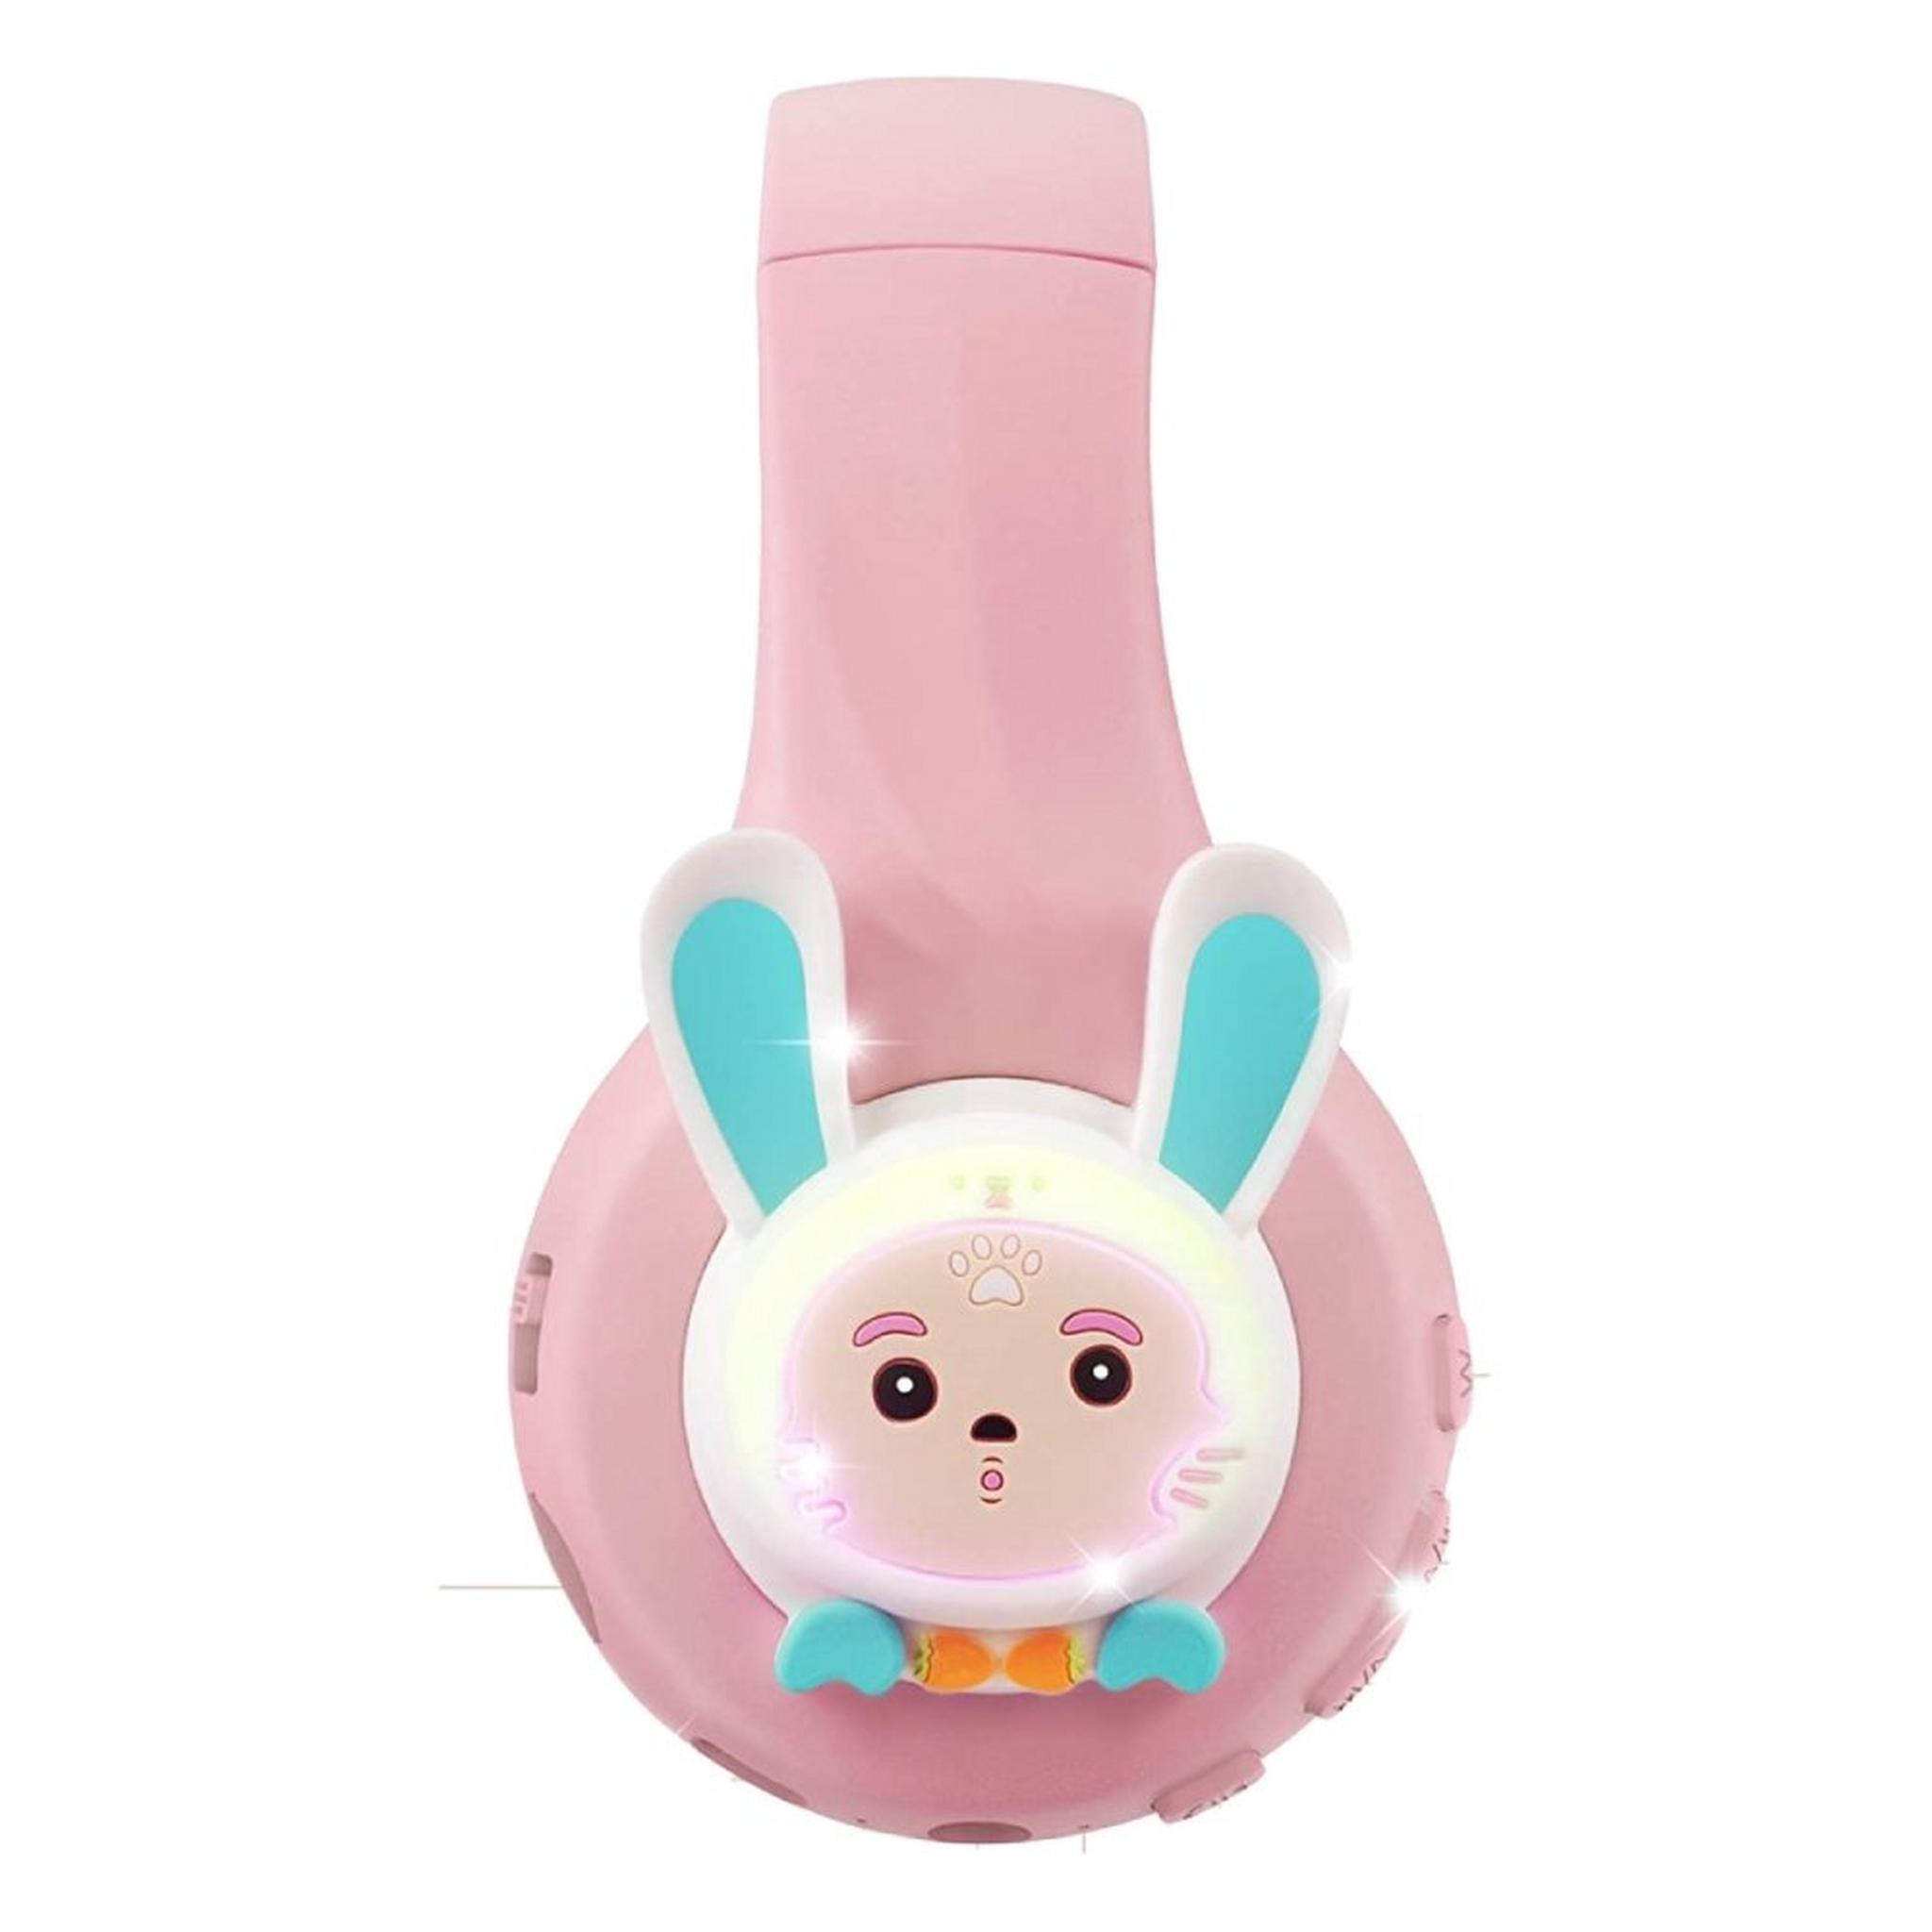 Riwbox Kids Bluetooth Rabbit Headphones - Pink/Green